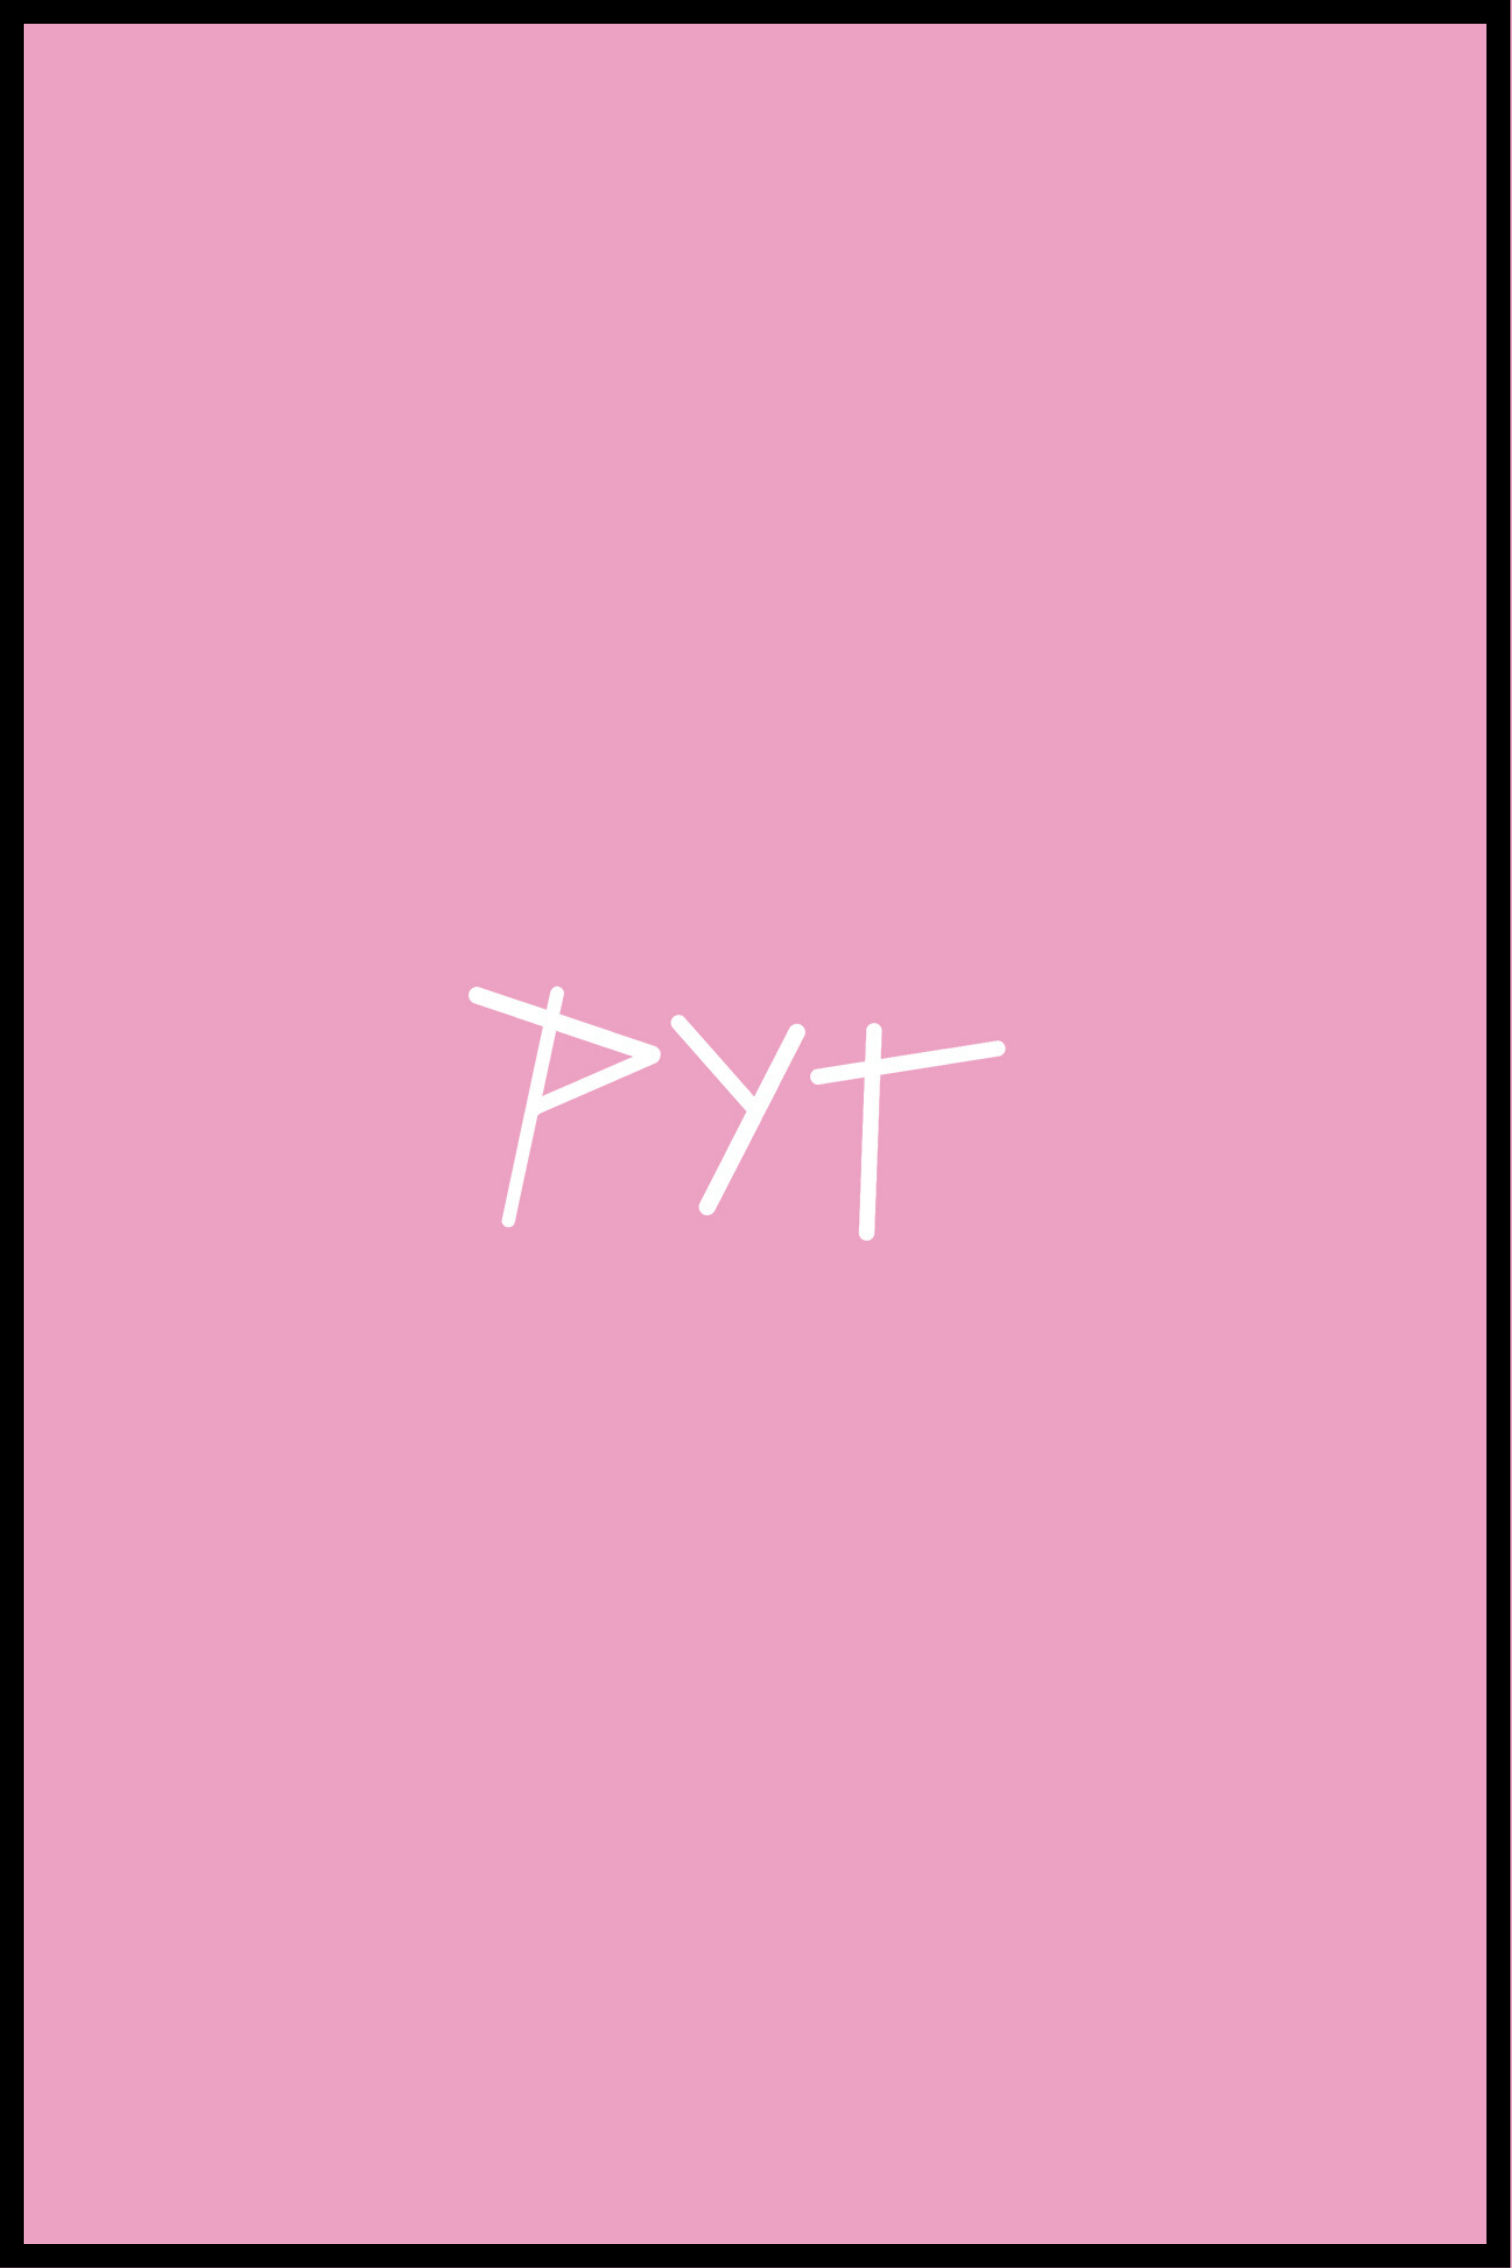 pyt-pink plakat